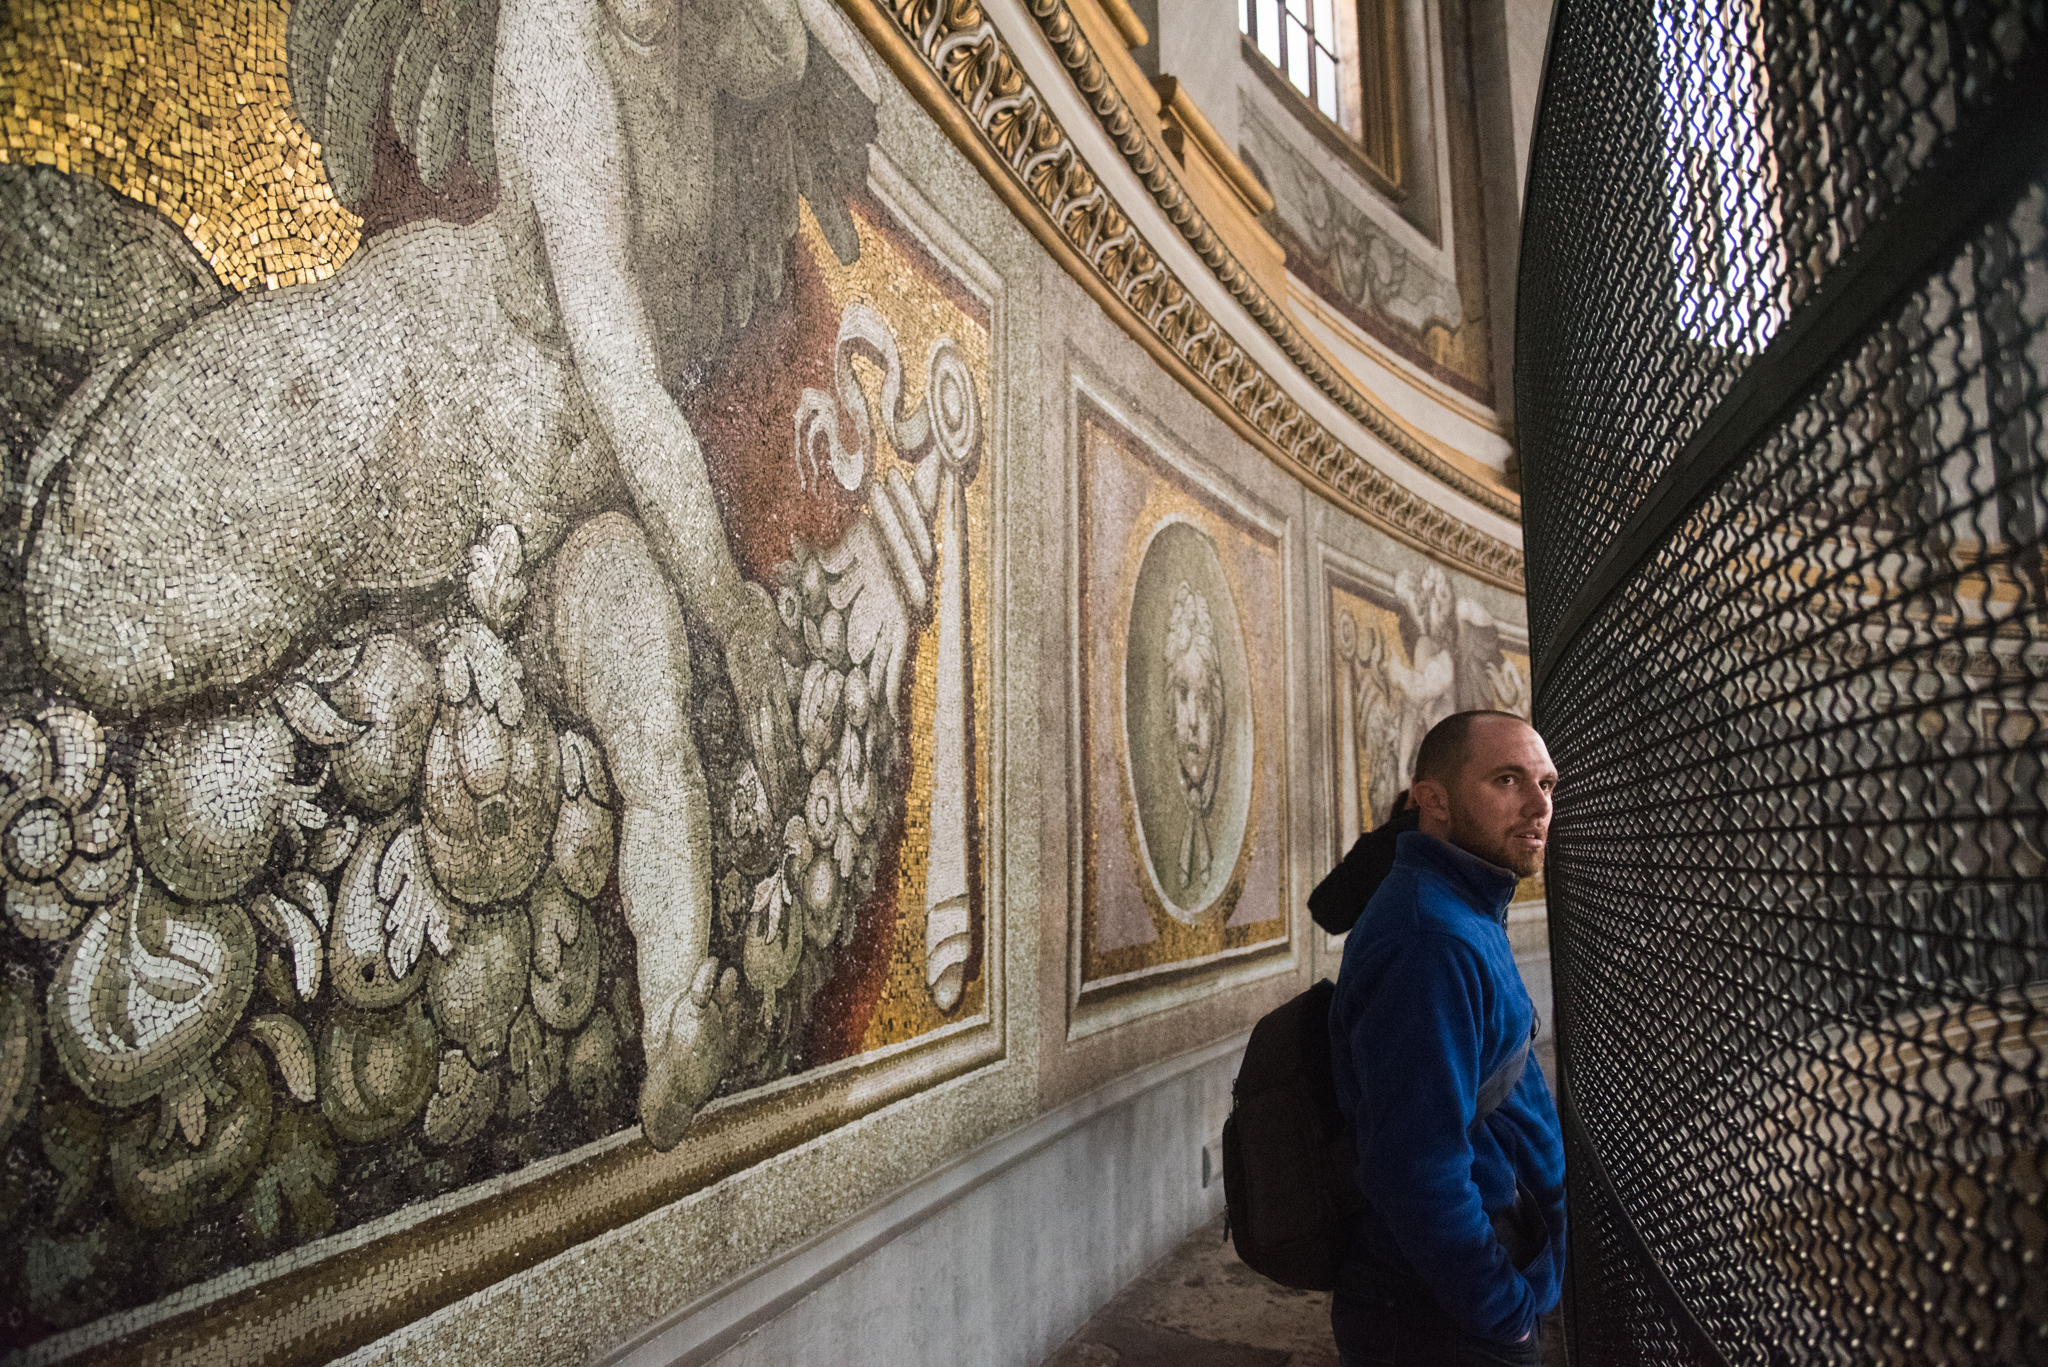 Cupola artwork - St. Peter's Basilica